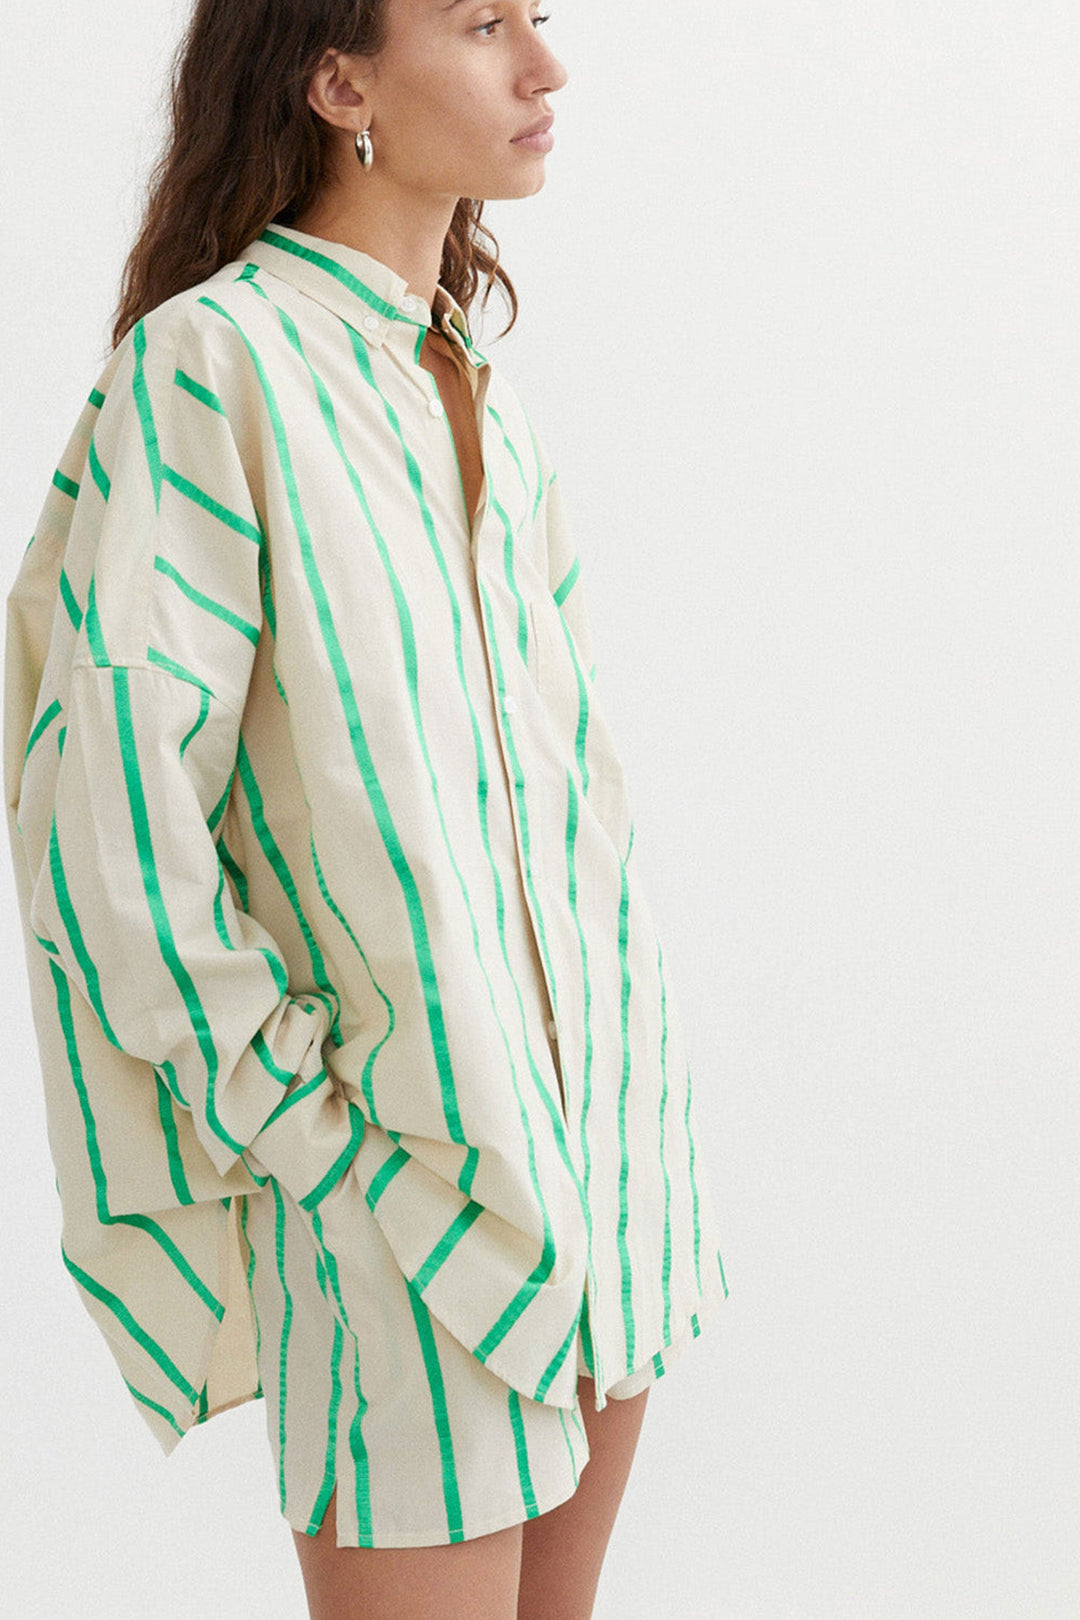 Blanca Fleur Shirt - Green